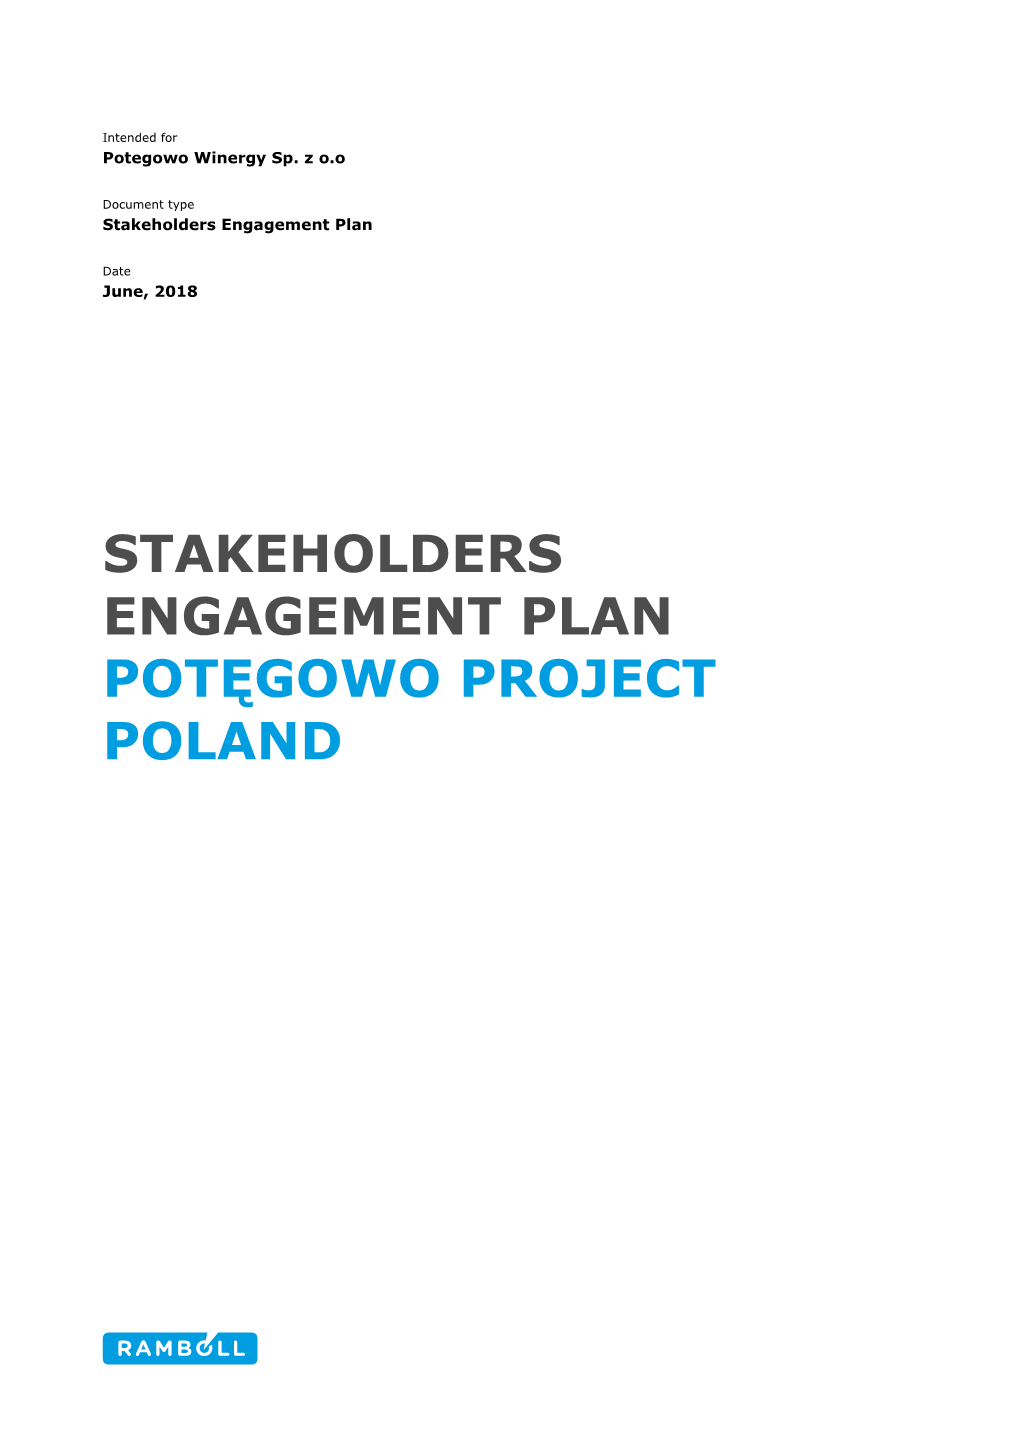 Stakeholders Engagement Plan Potęgowo Project Poland